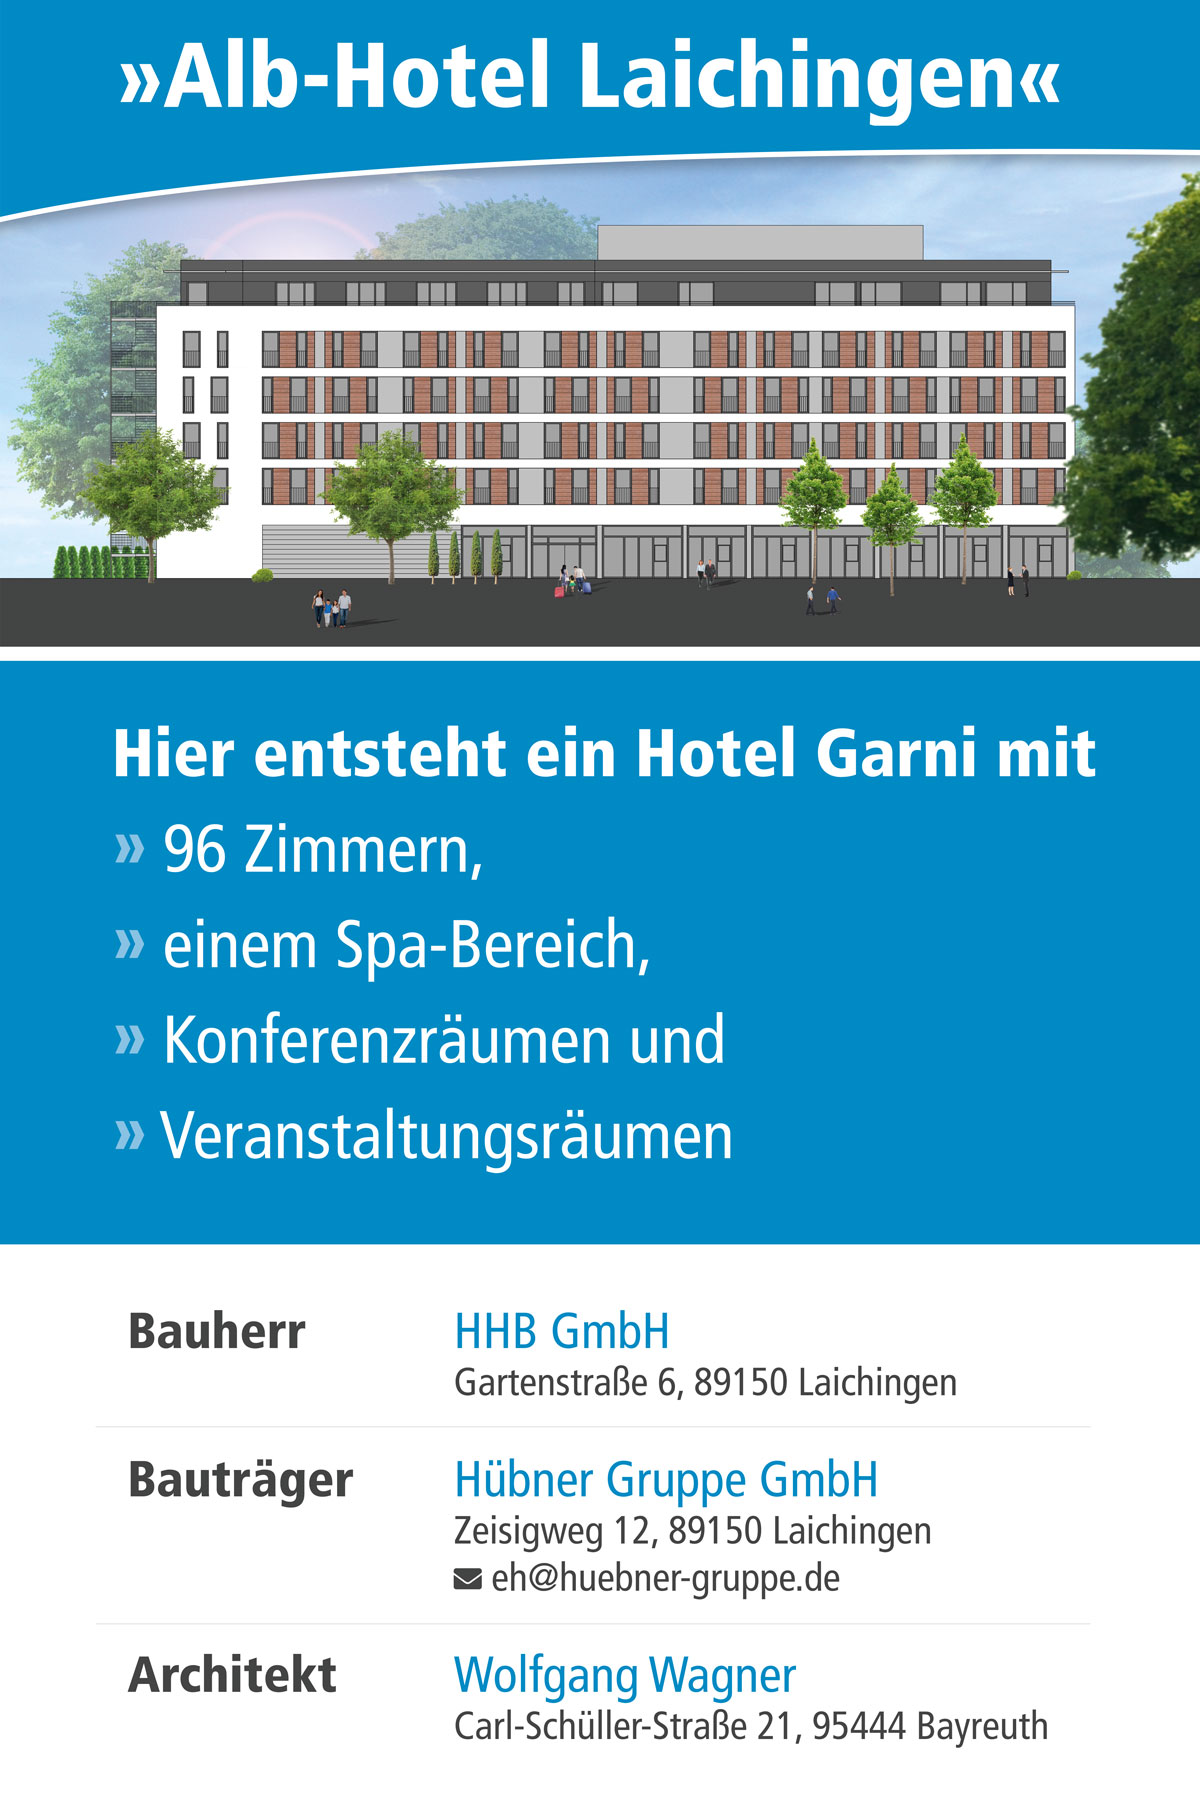 Alb-Hotel-Laichingen